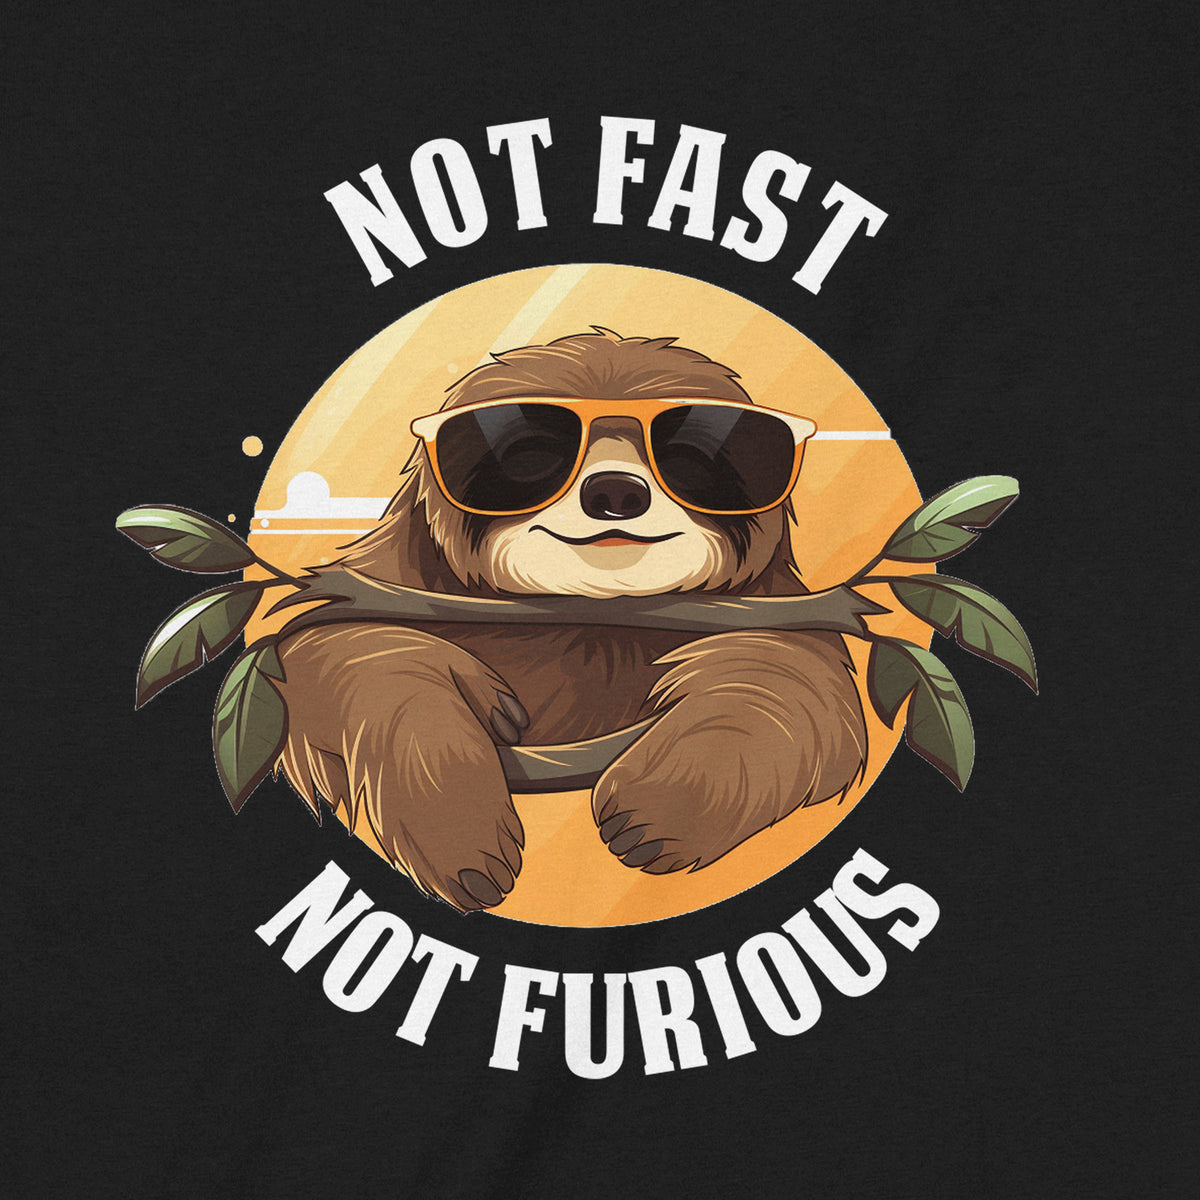 "Not Fast, Not Furious" Premium Midweight Ringspun Cotton T-Shirt - Mens/Womens Fits